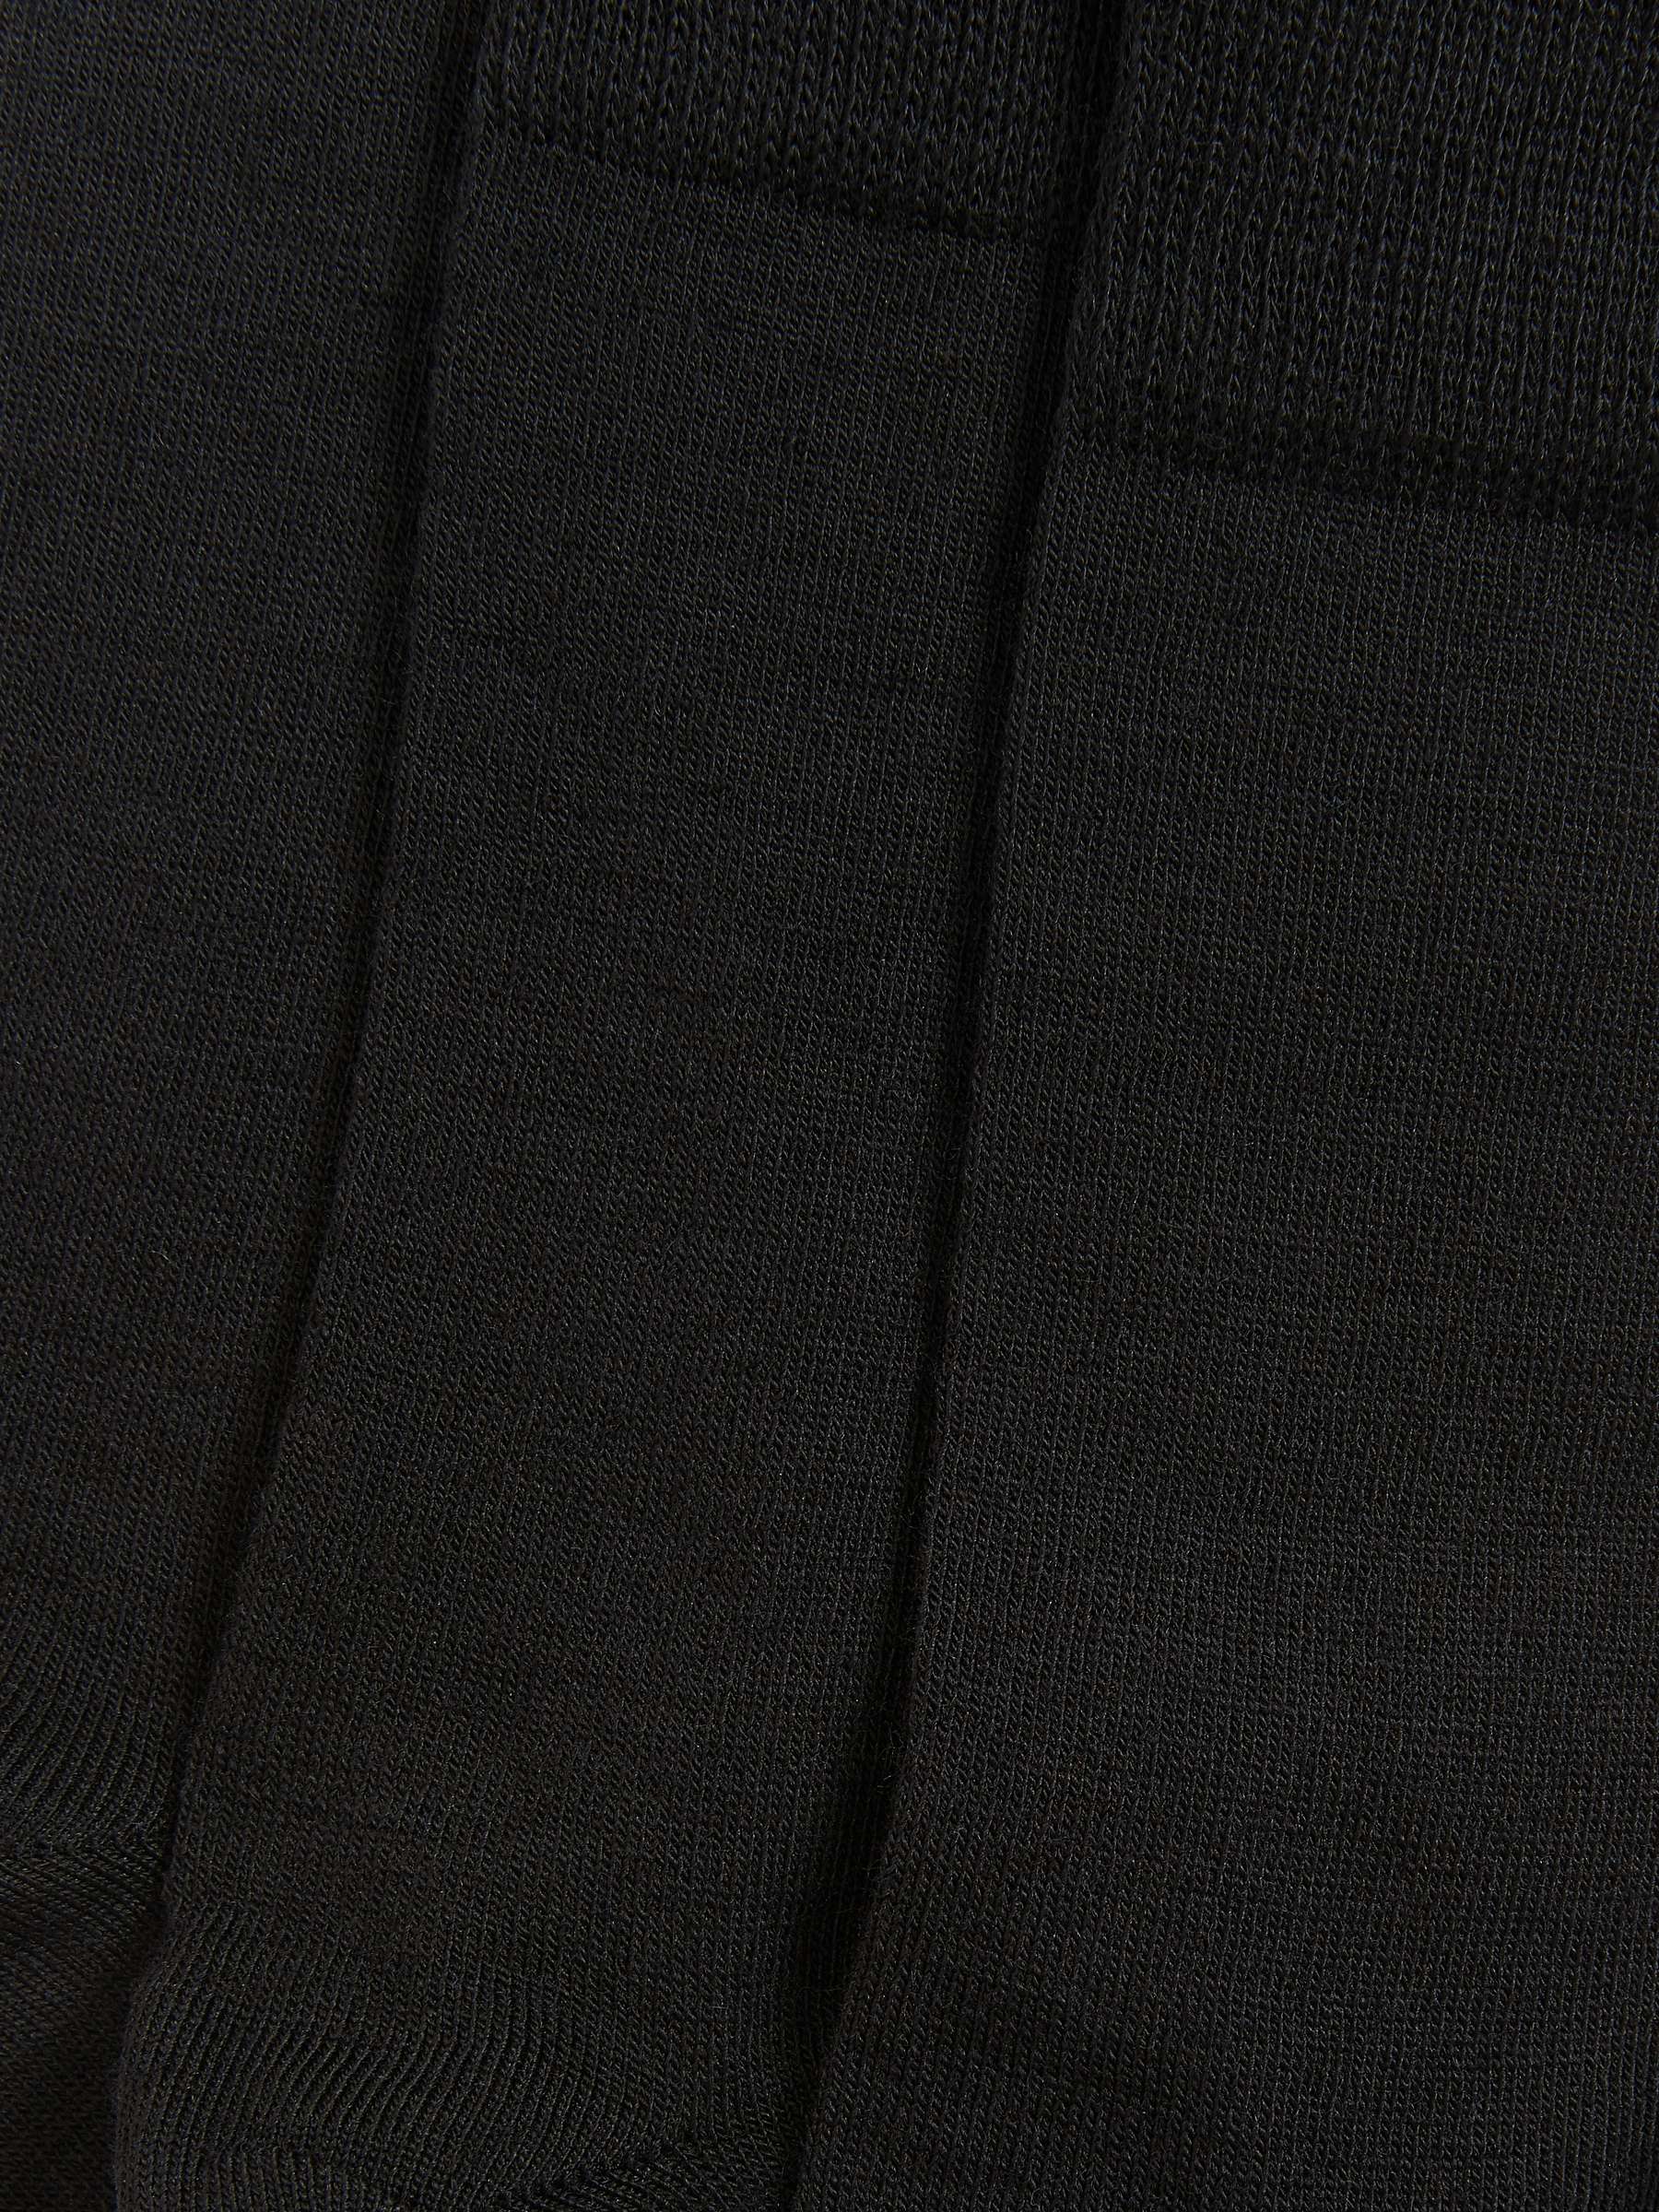 Buy John Lewis Wool Mix Men's Socks, Pack of 3 Online at johnlewis.com